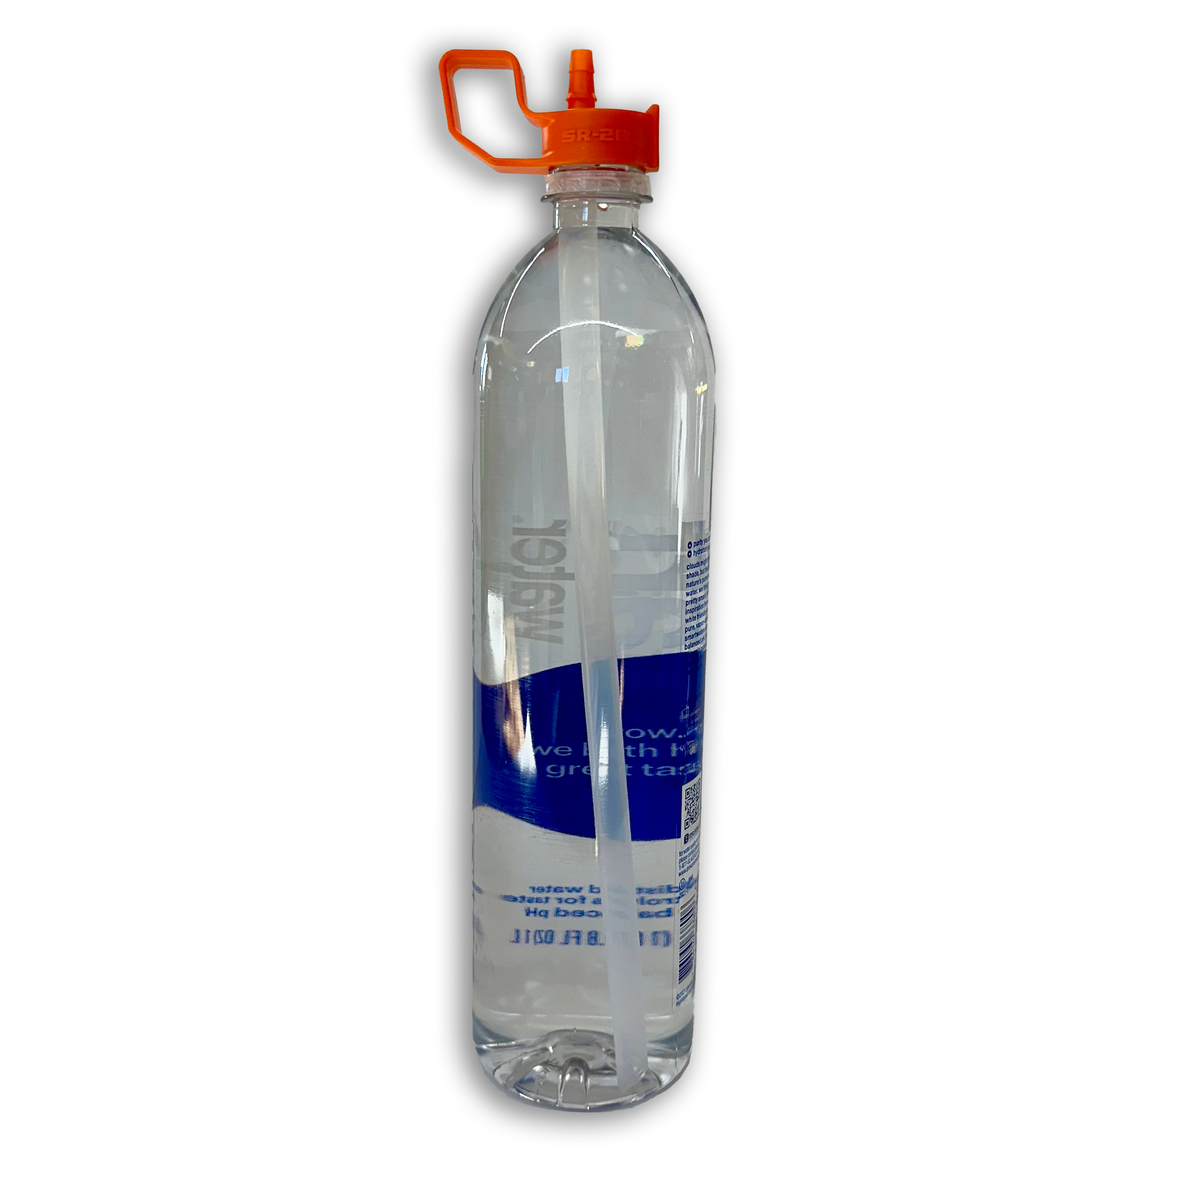 SWIG63: Hands-Free Adapter Cap for Bottles – Original Free Range